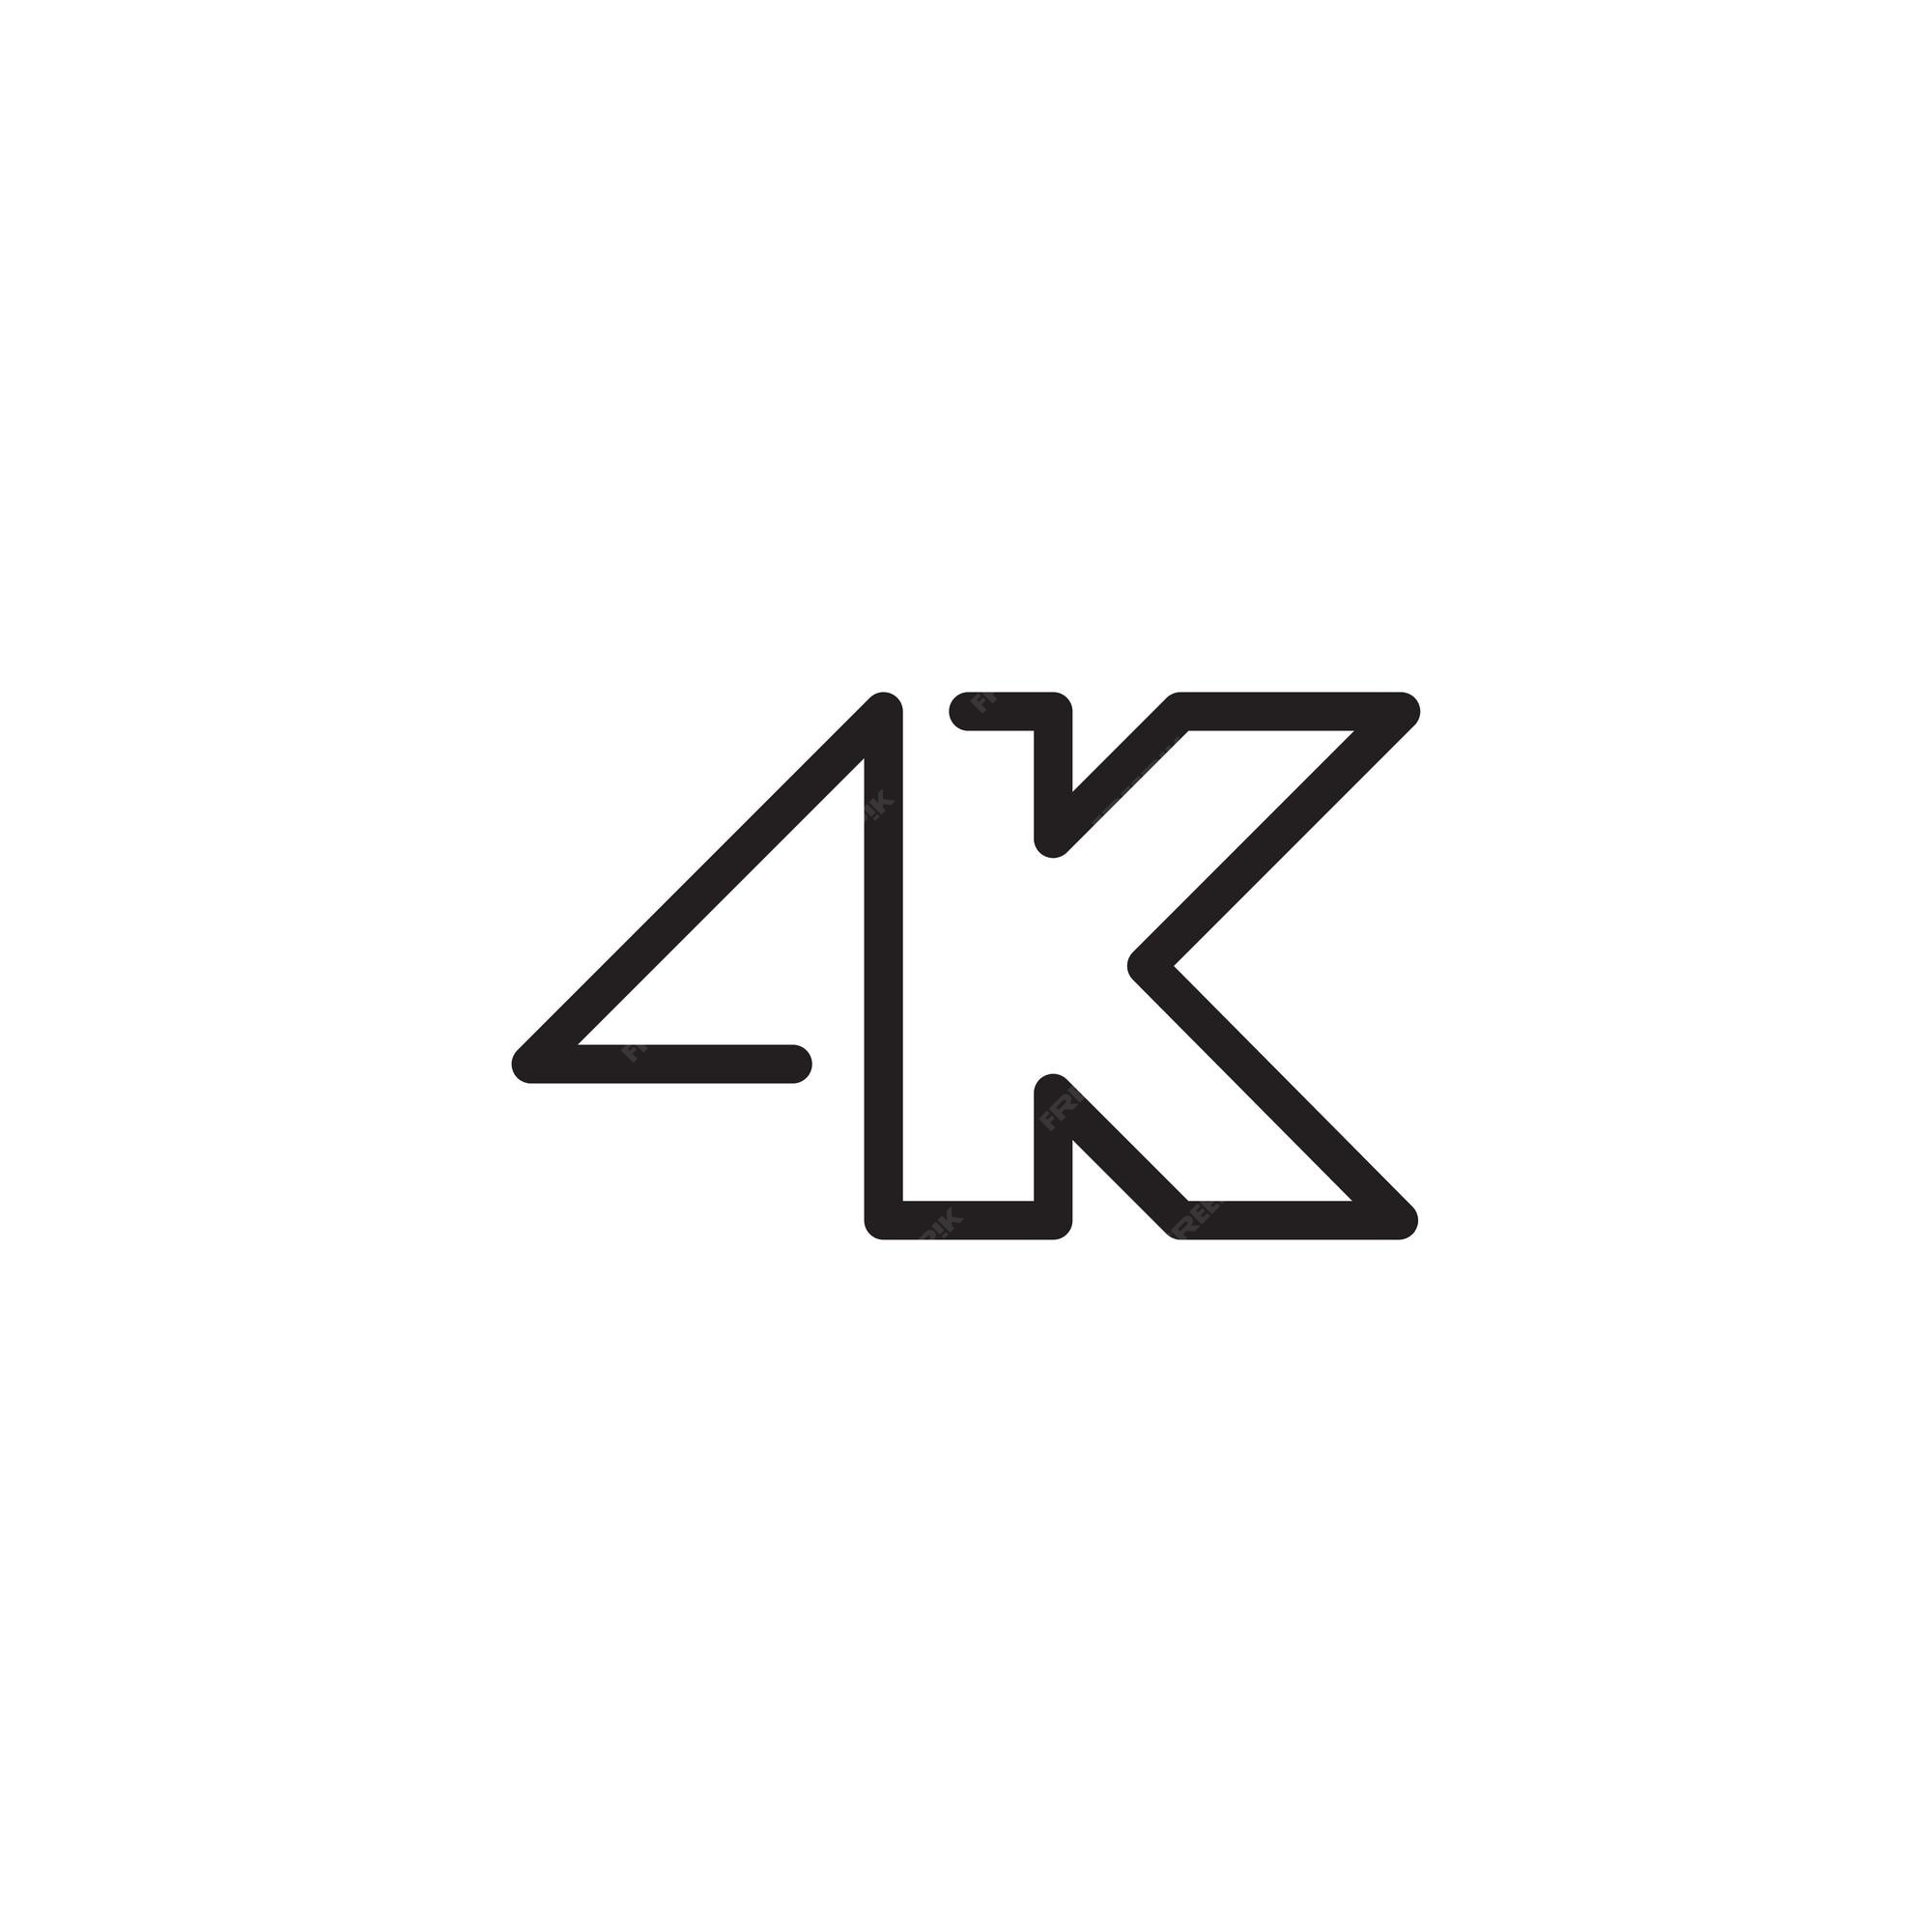 Premium Vector | 4k letter icon logo vector template